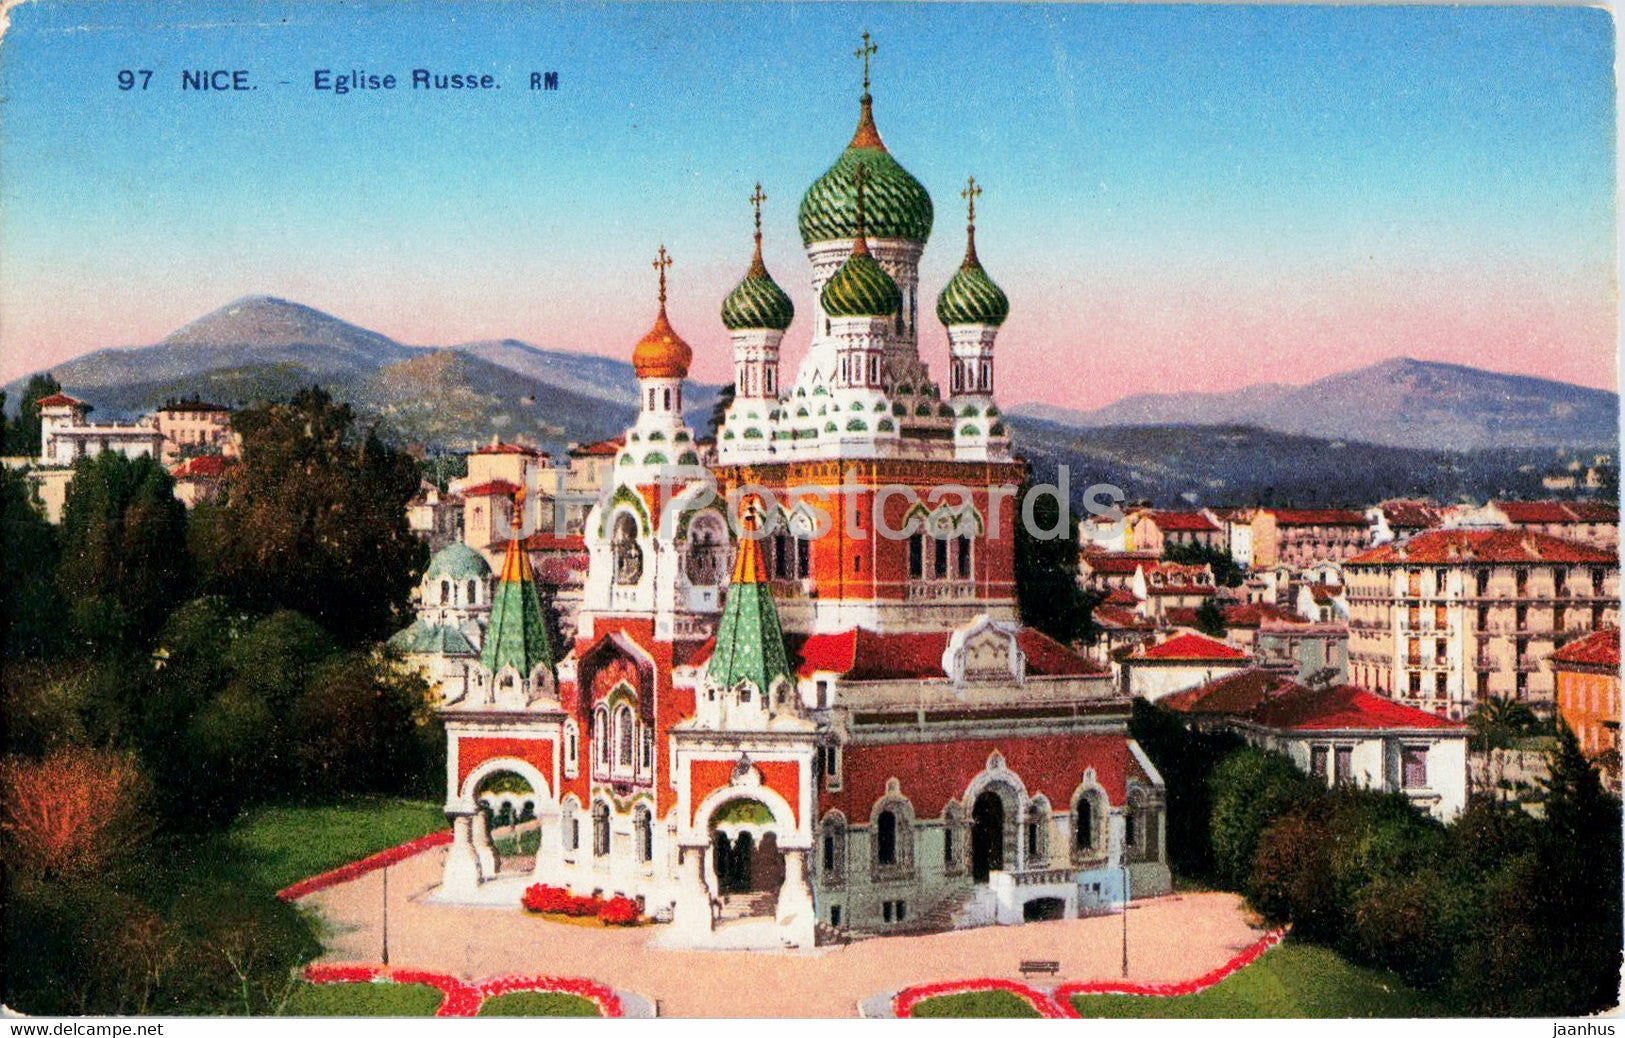 Nice - Eglise Russie - church - 97 - old postcard - France - unused - JH Postcards